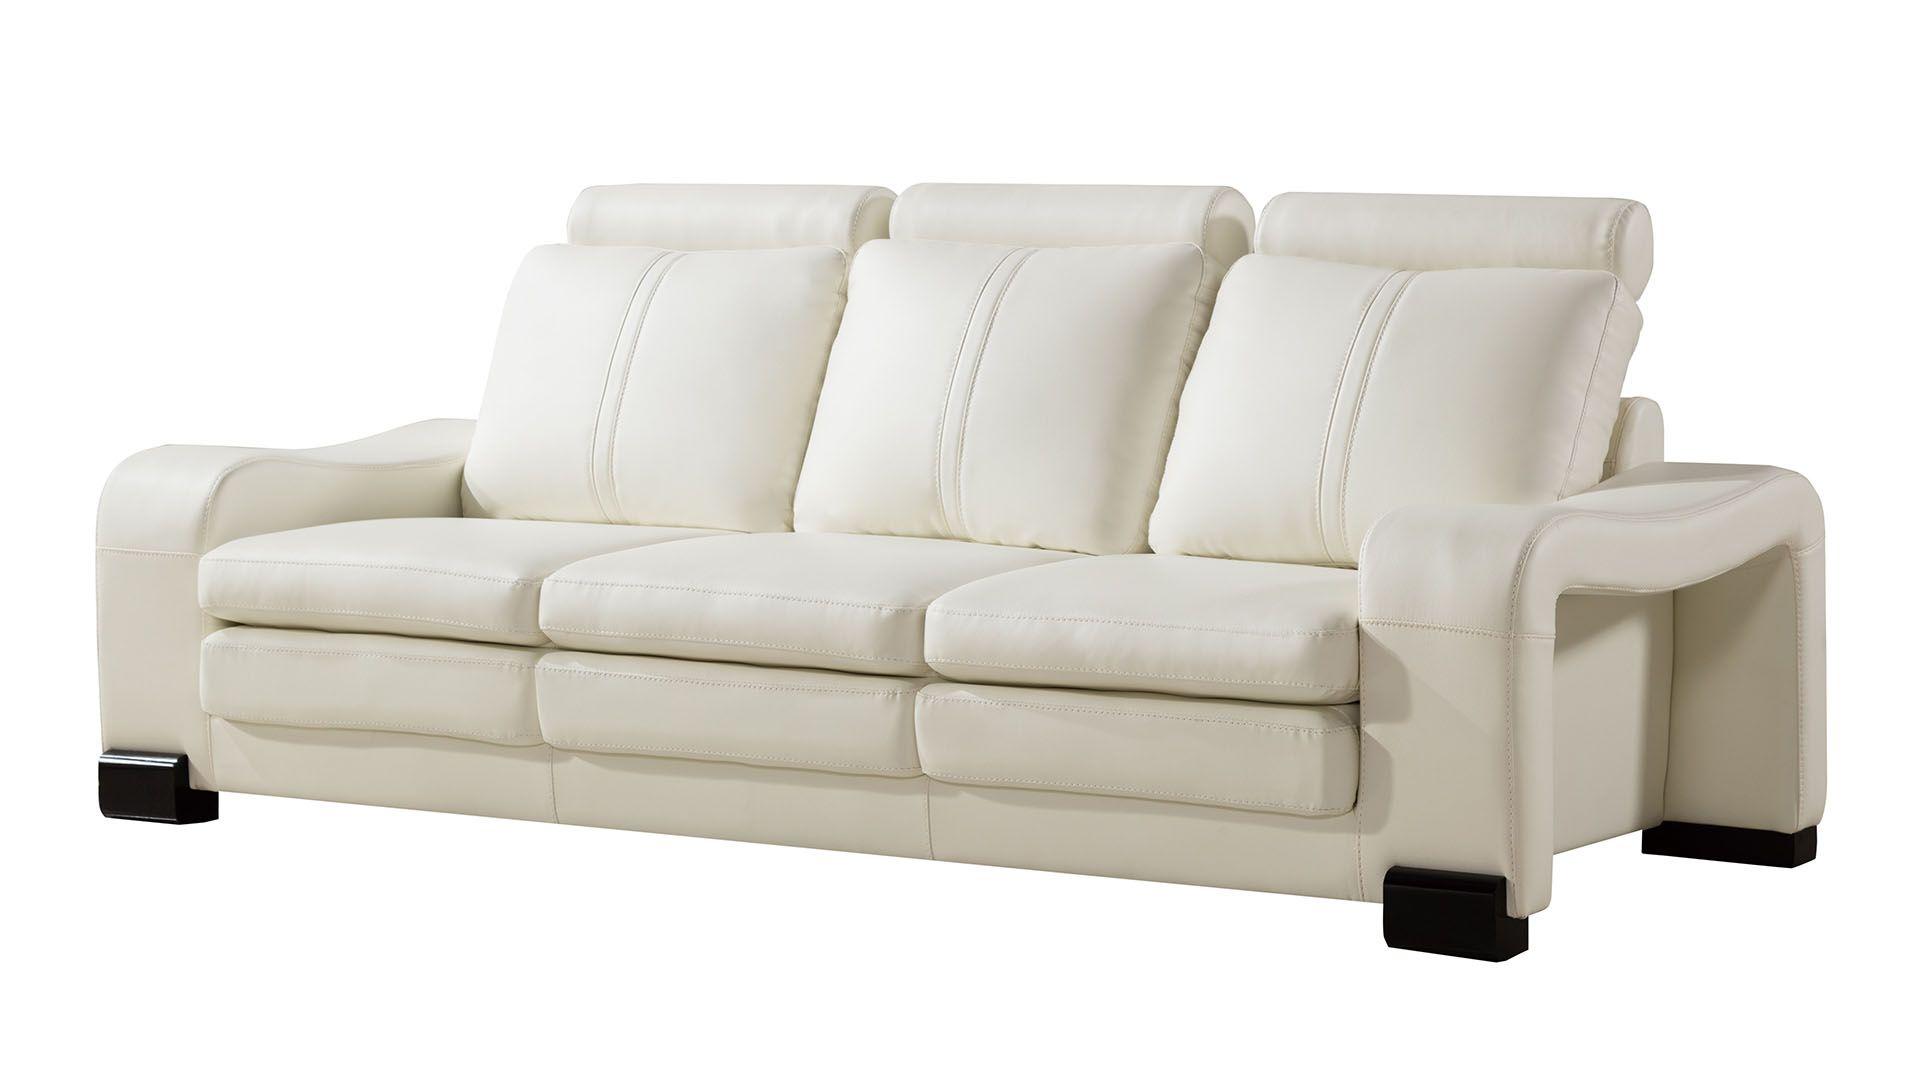 

    
American Eagle Furniture AE210-IV Sofa Set Ivory AE210-IV -6PC
